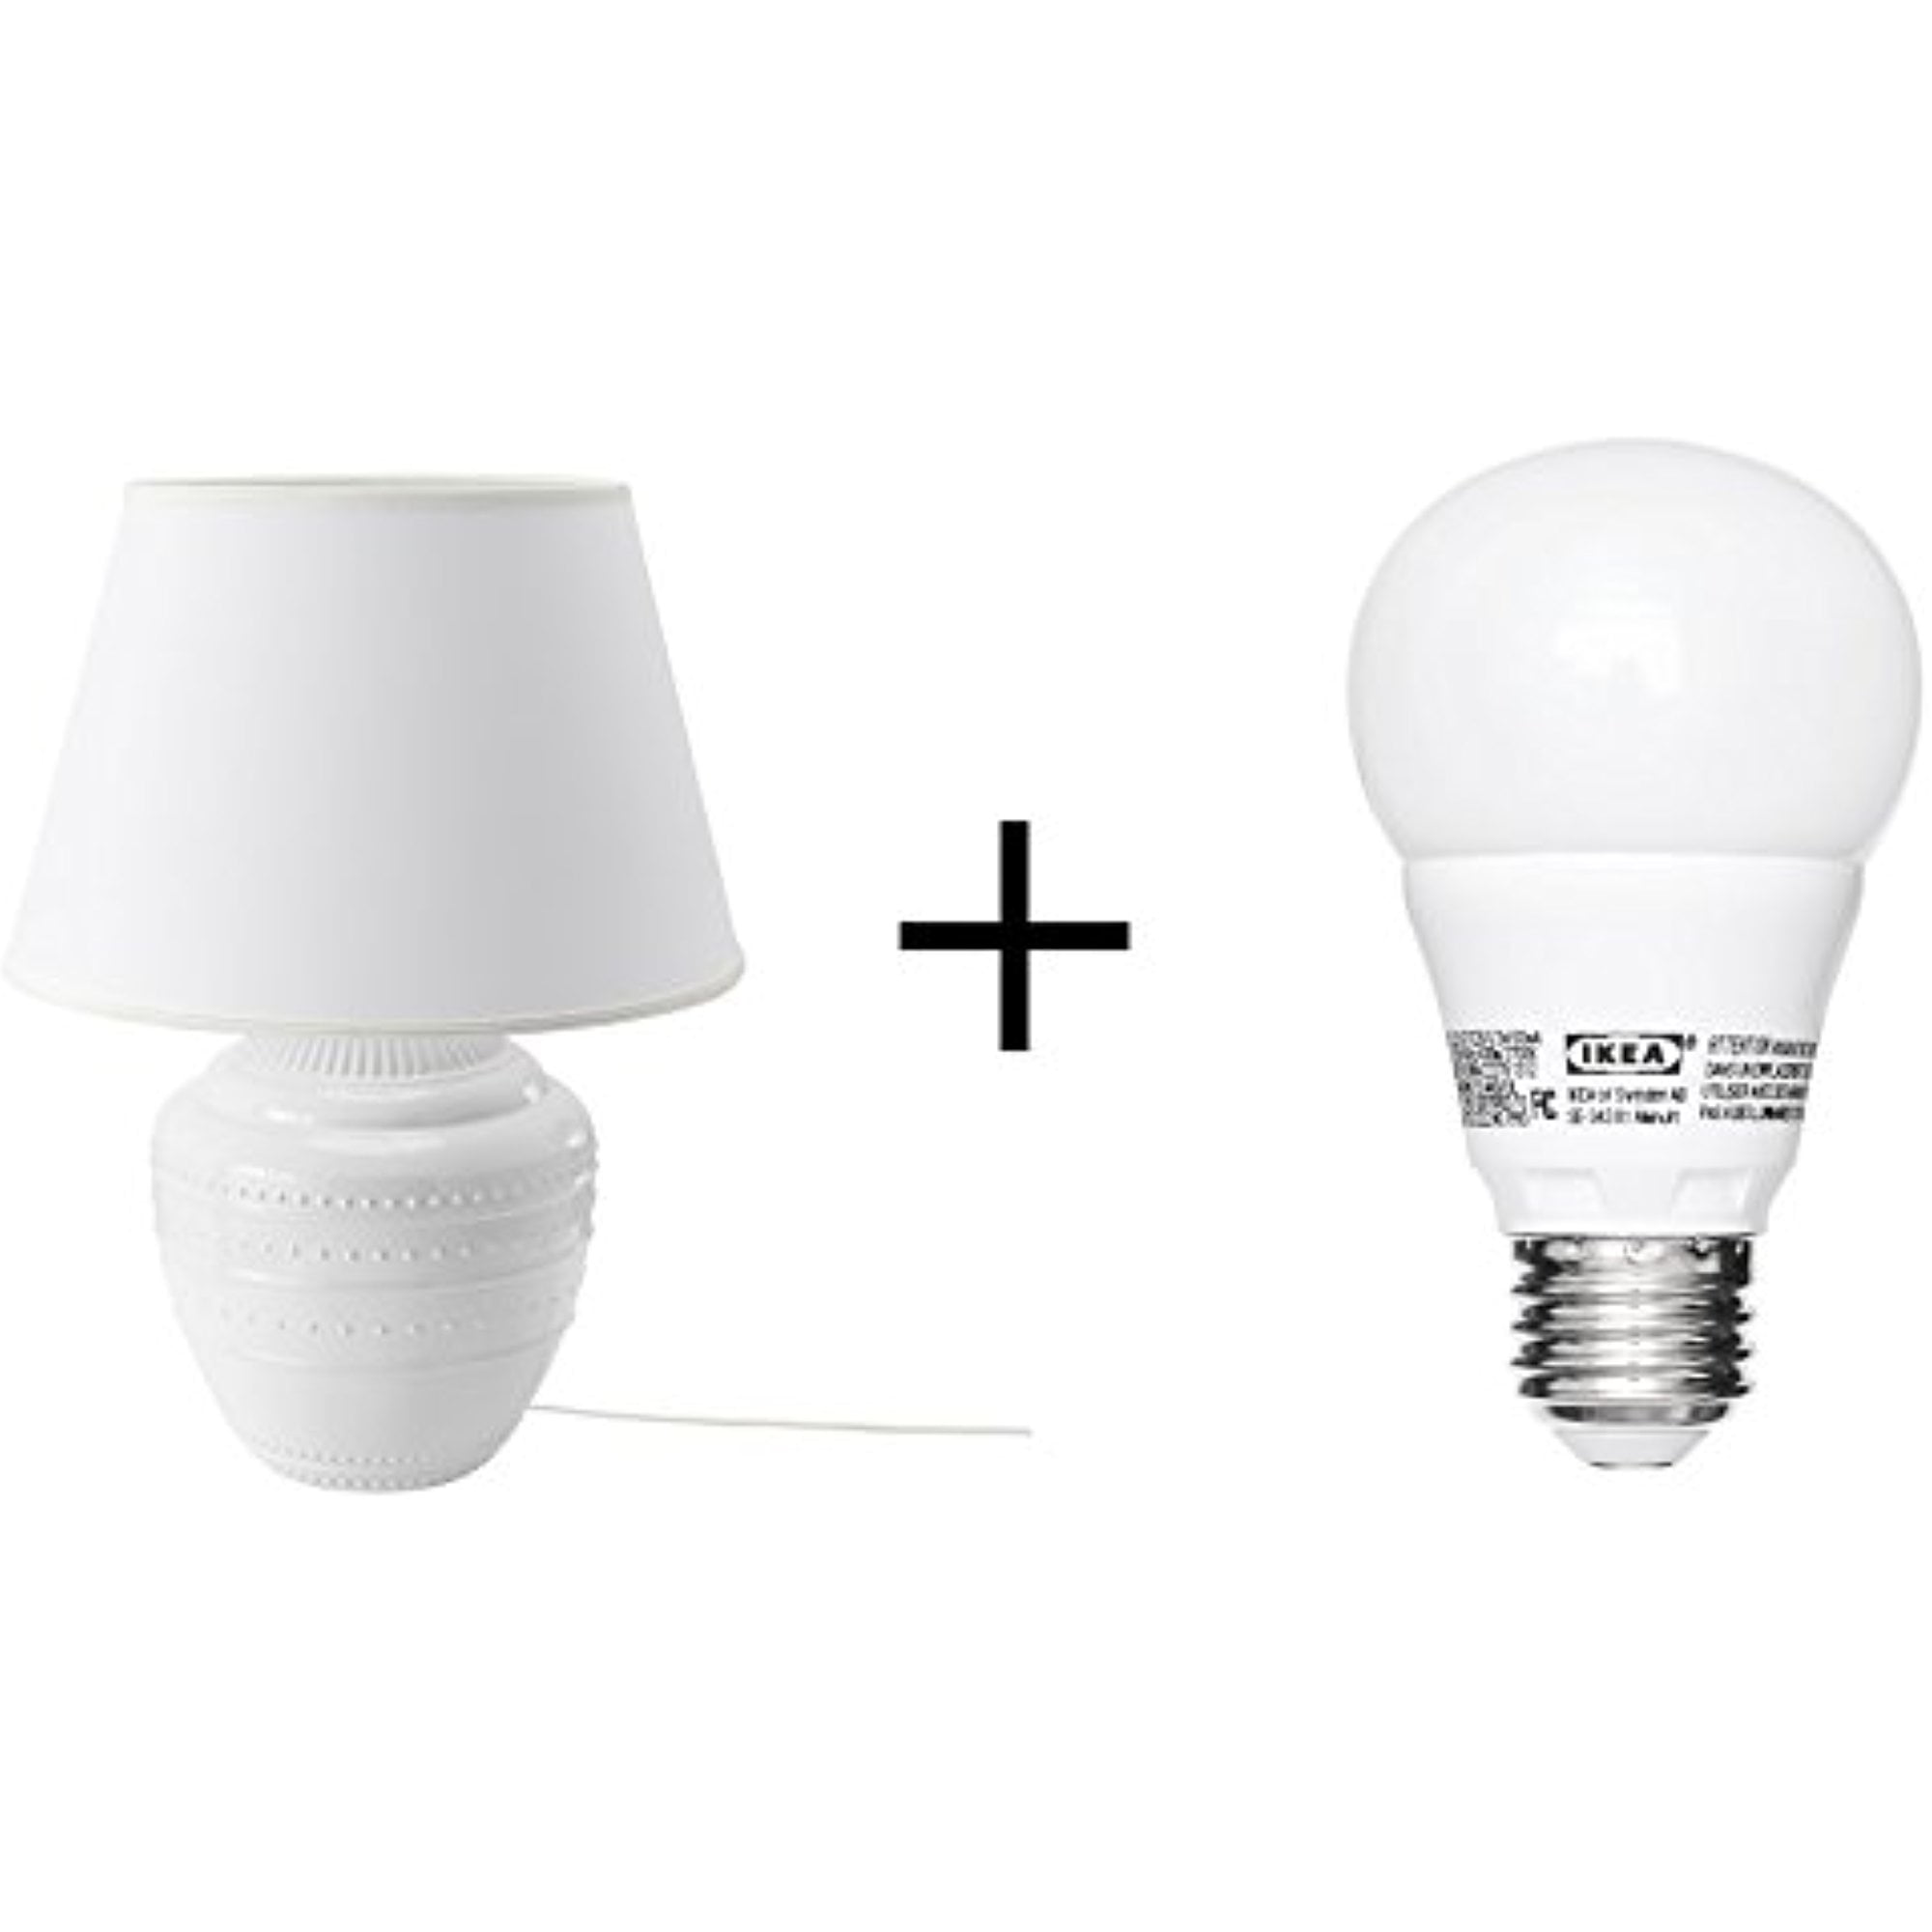 Ikea Table Lamp White Size 23 And, Ikea Table Lamp Bulb